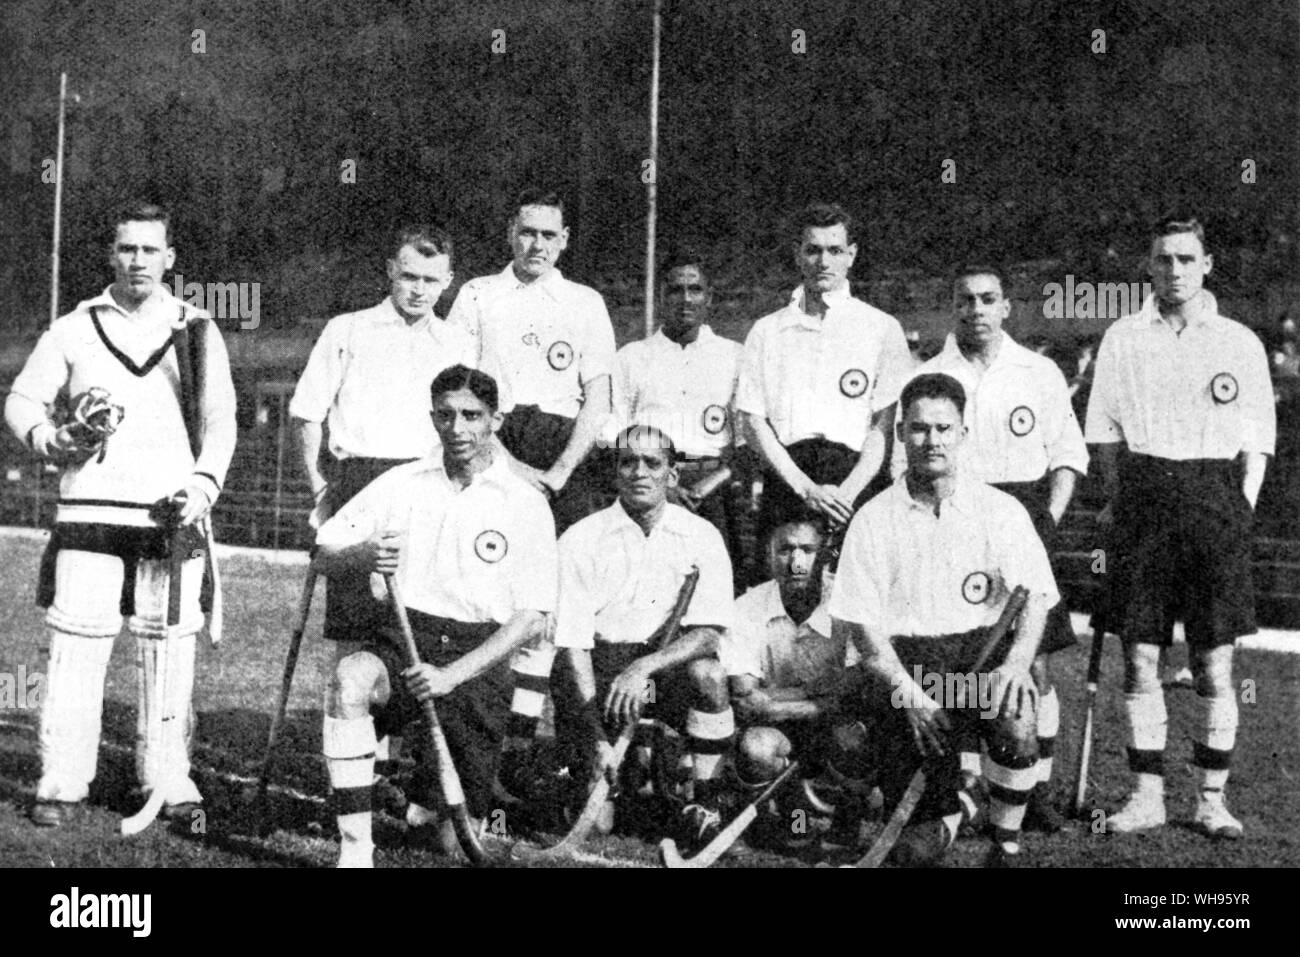 Indian Hockey Giochi Olimpici Amsterdam 1928 Foto Stock